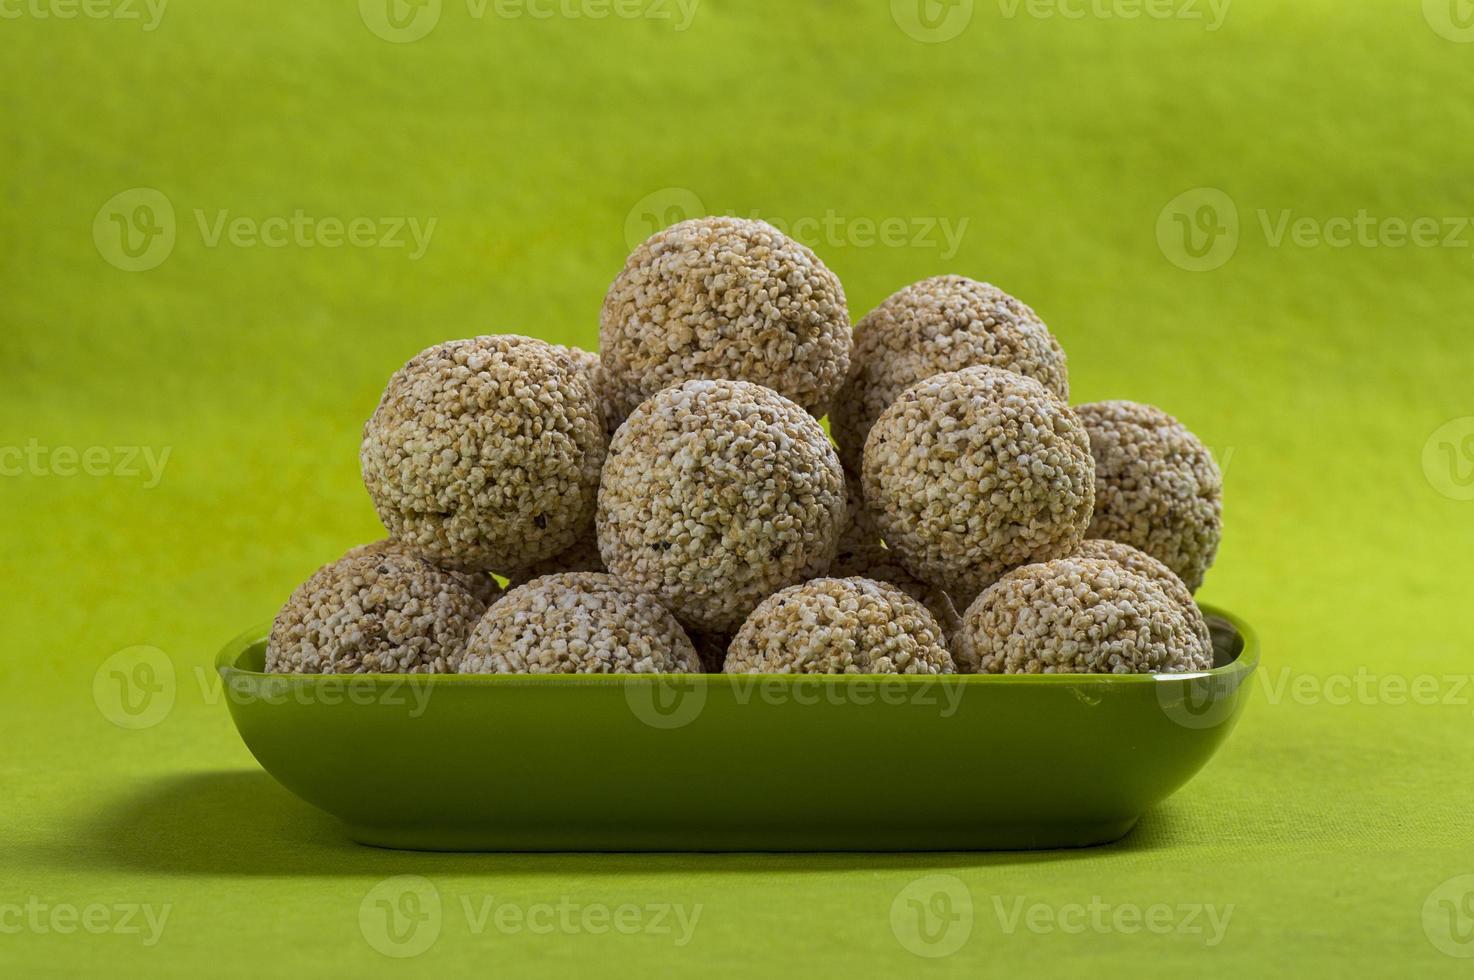 amaranto o rajgira laddu, cholai ke laddo in piatto verde su sfondo verde foto